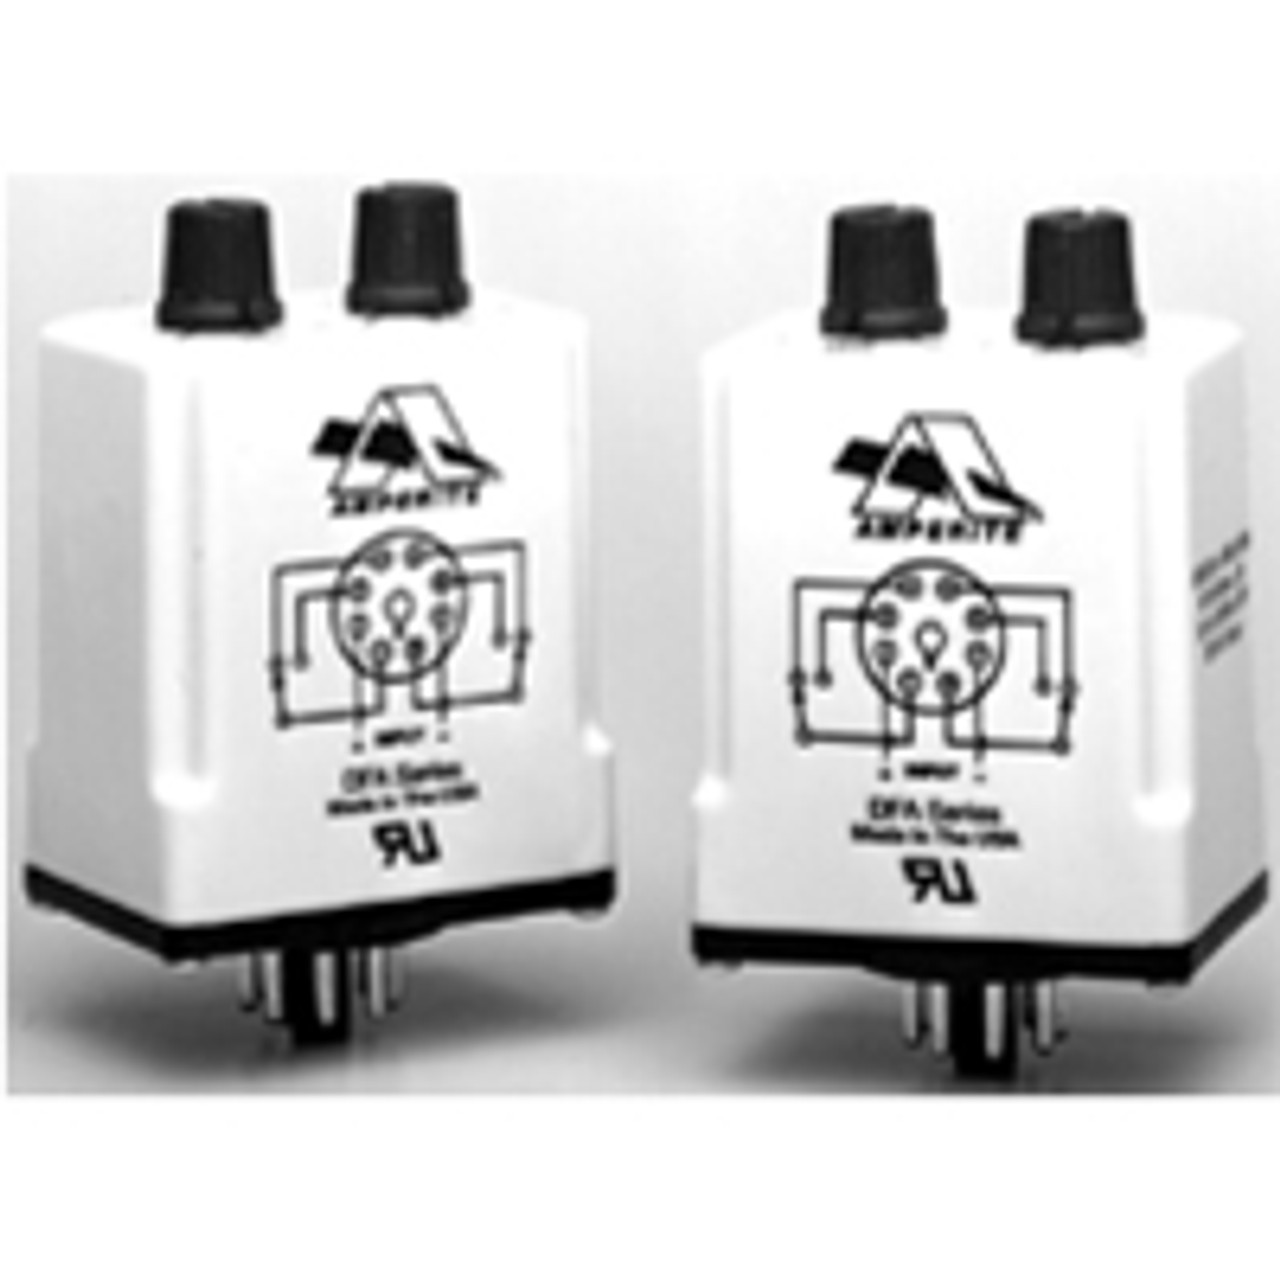 Amperite 120AF/EDFA Dual Rate Flashers